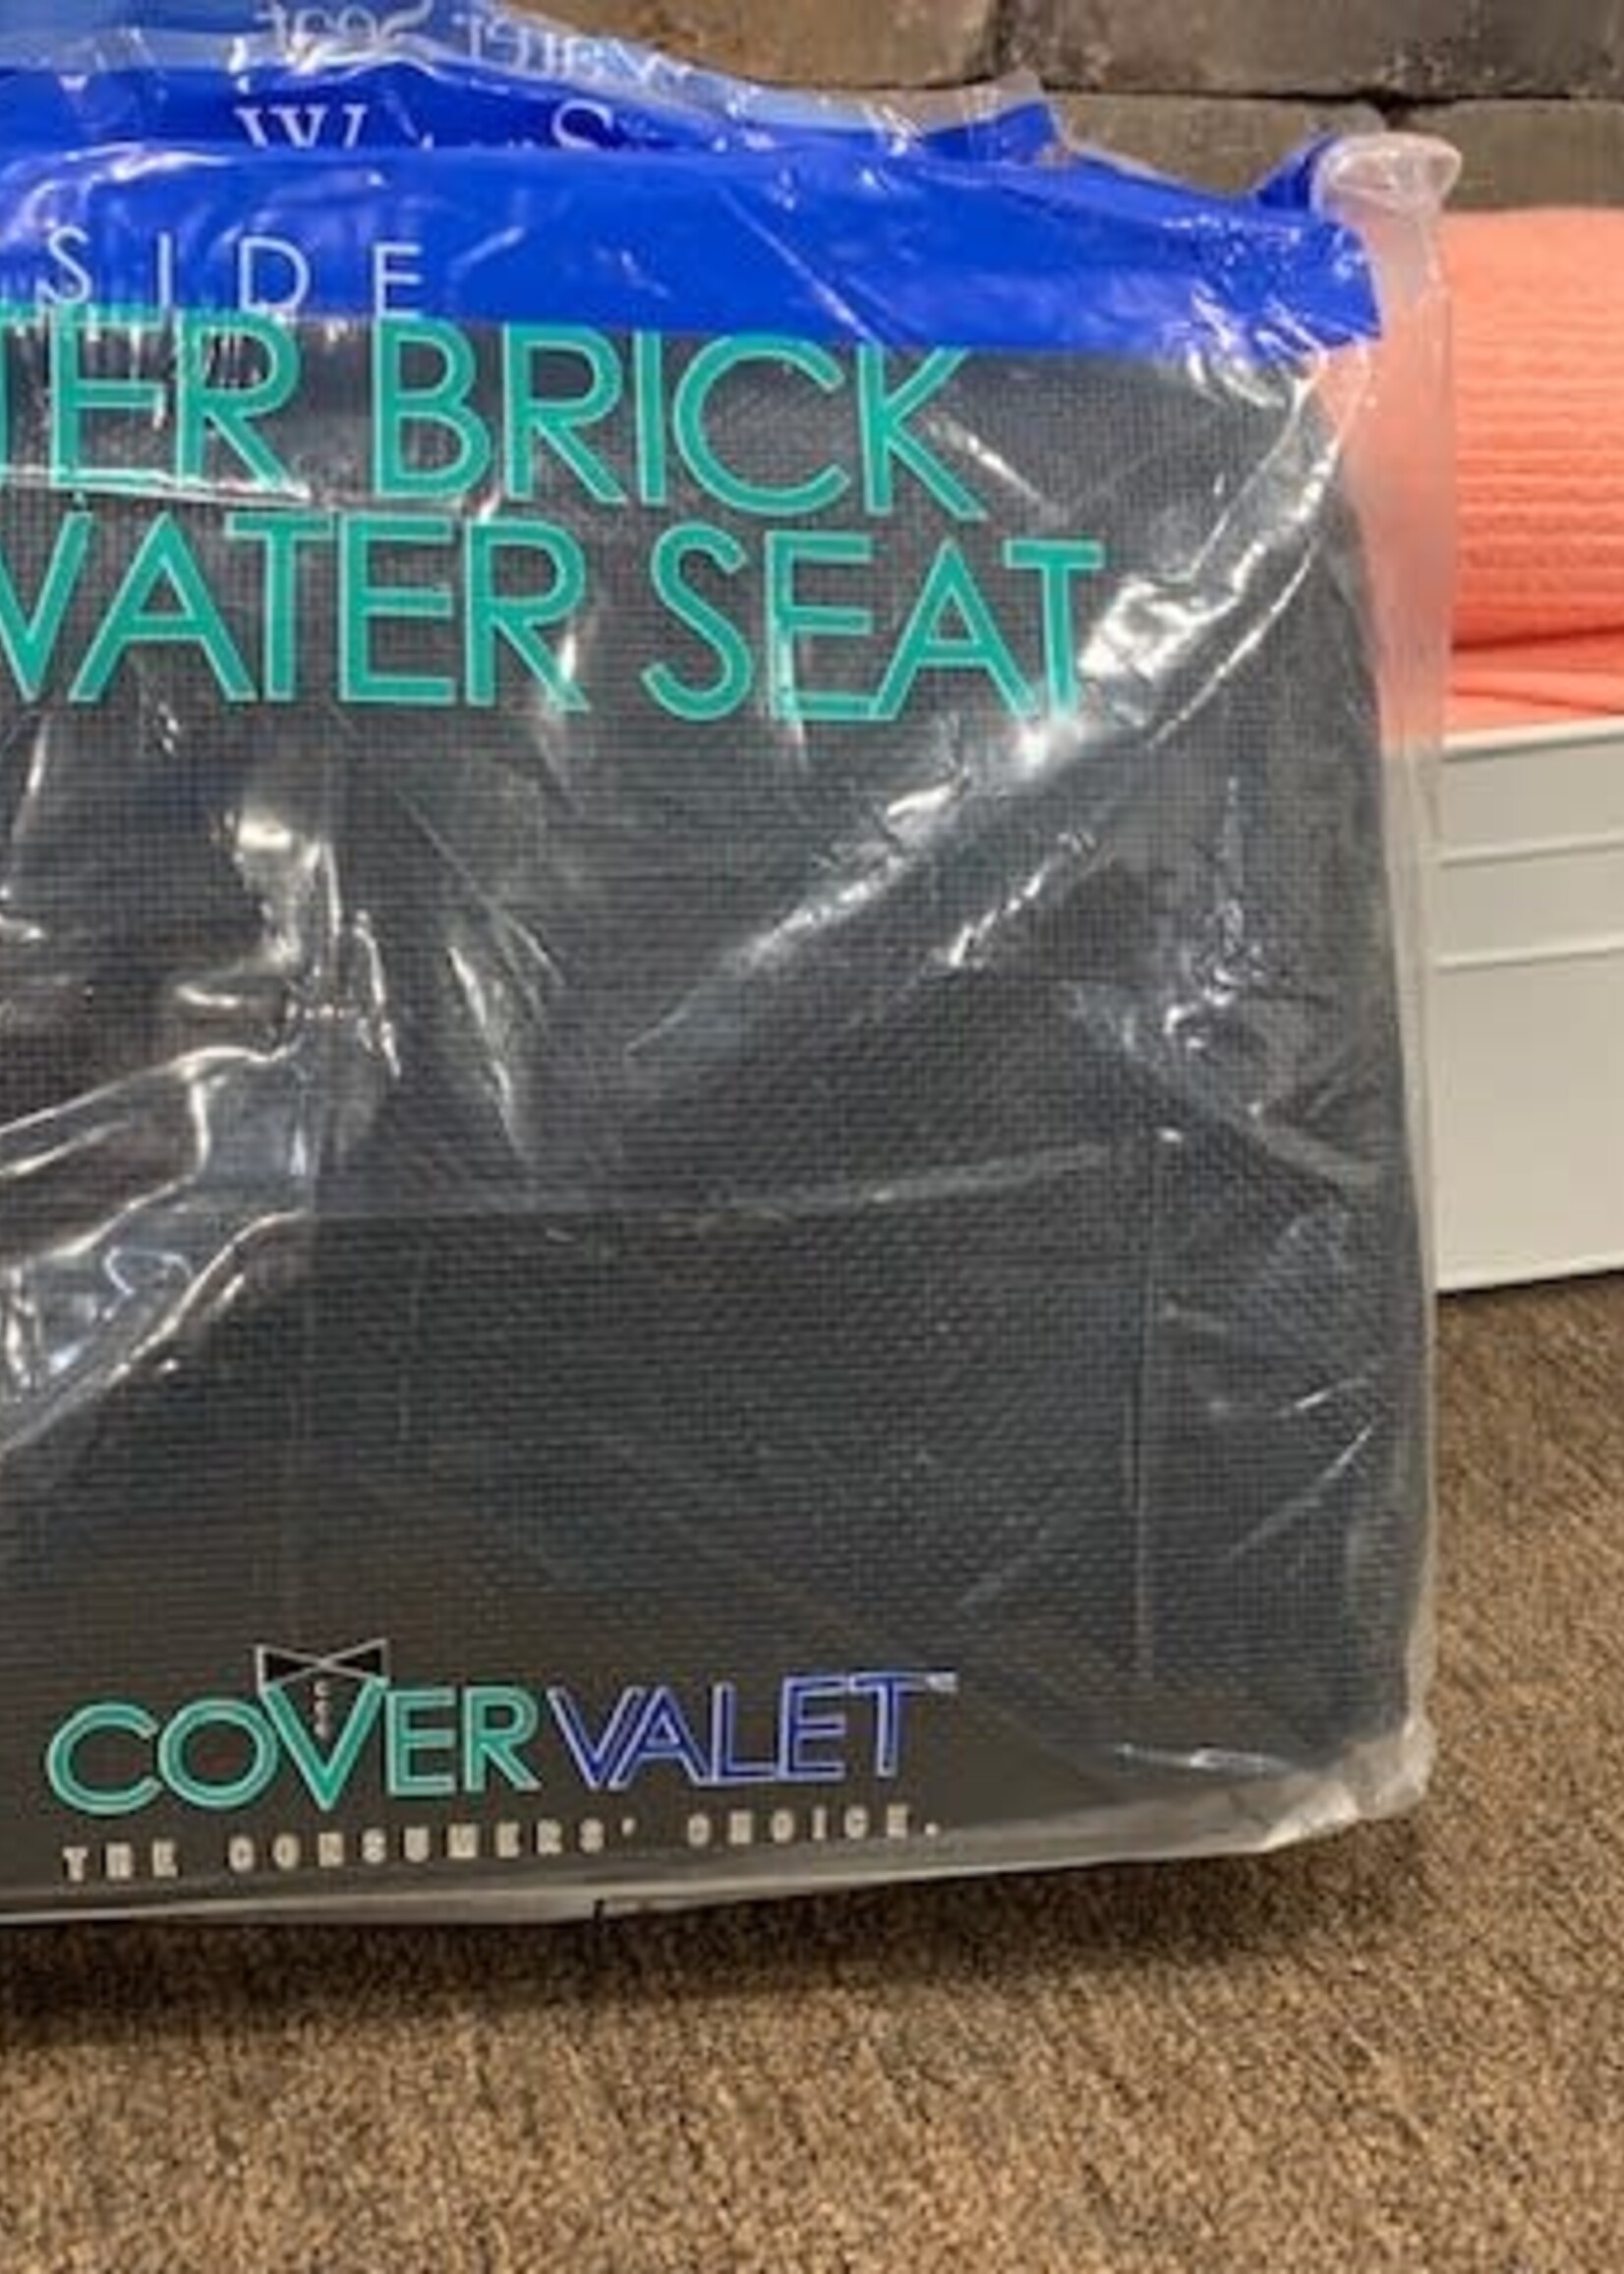 Accessories Water Brick Water Seat